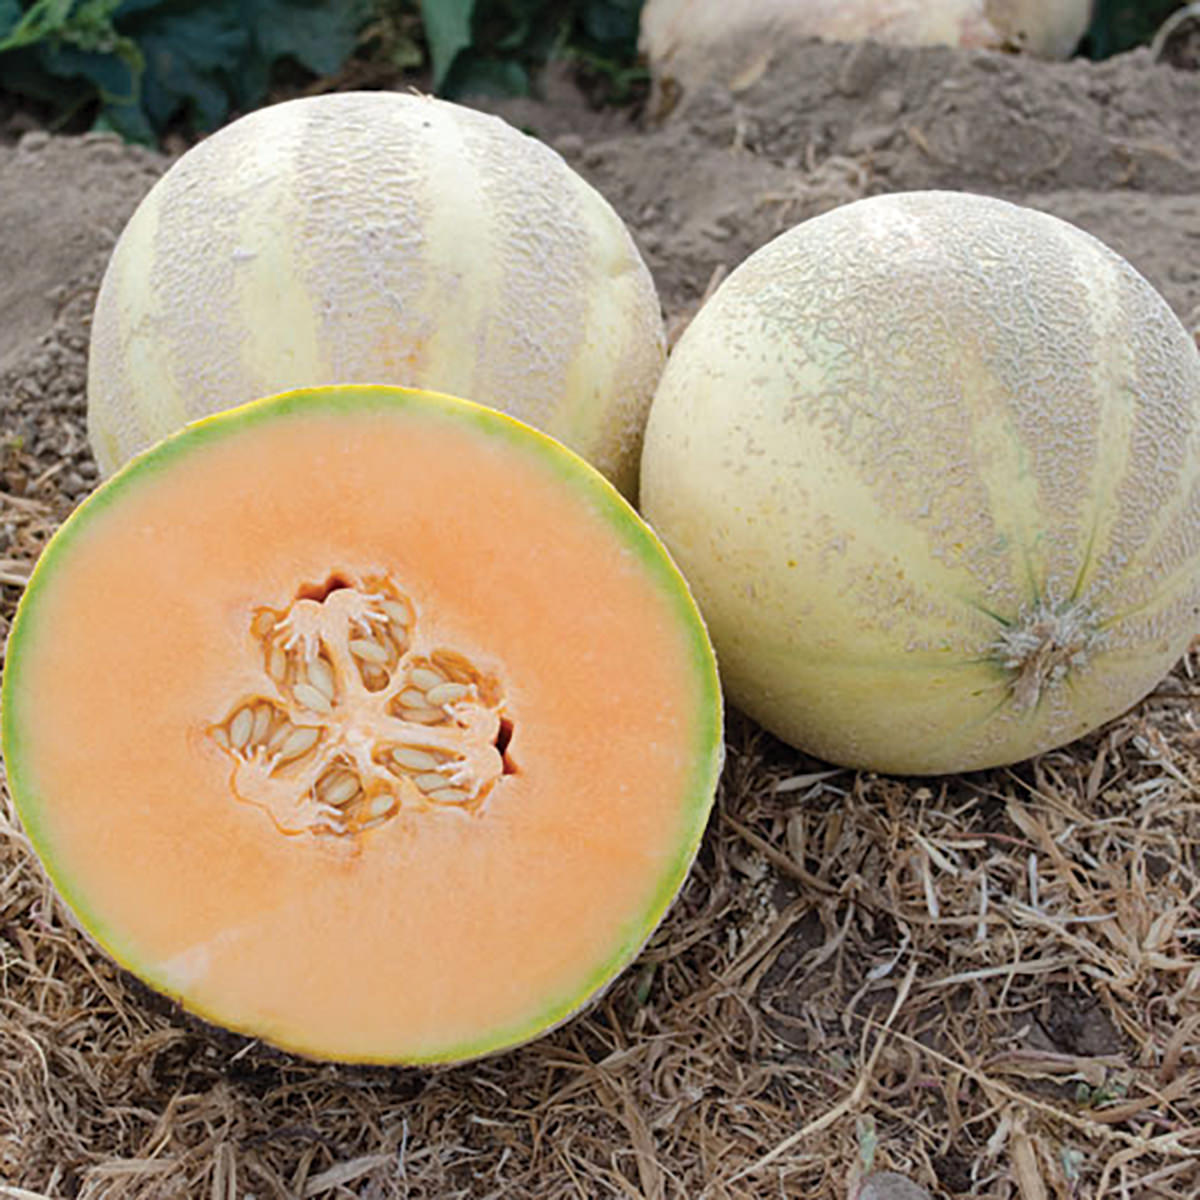 Oui F1 Hybrid Charentais Mixed Melon